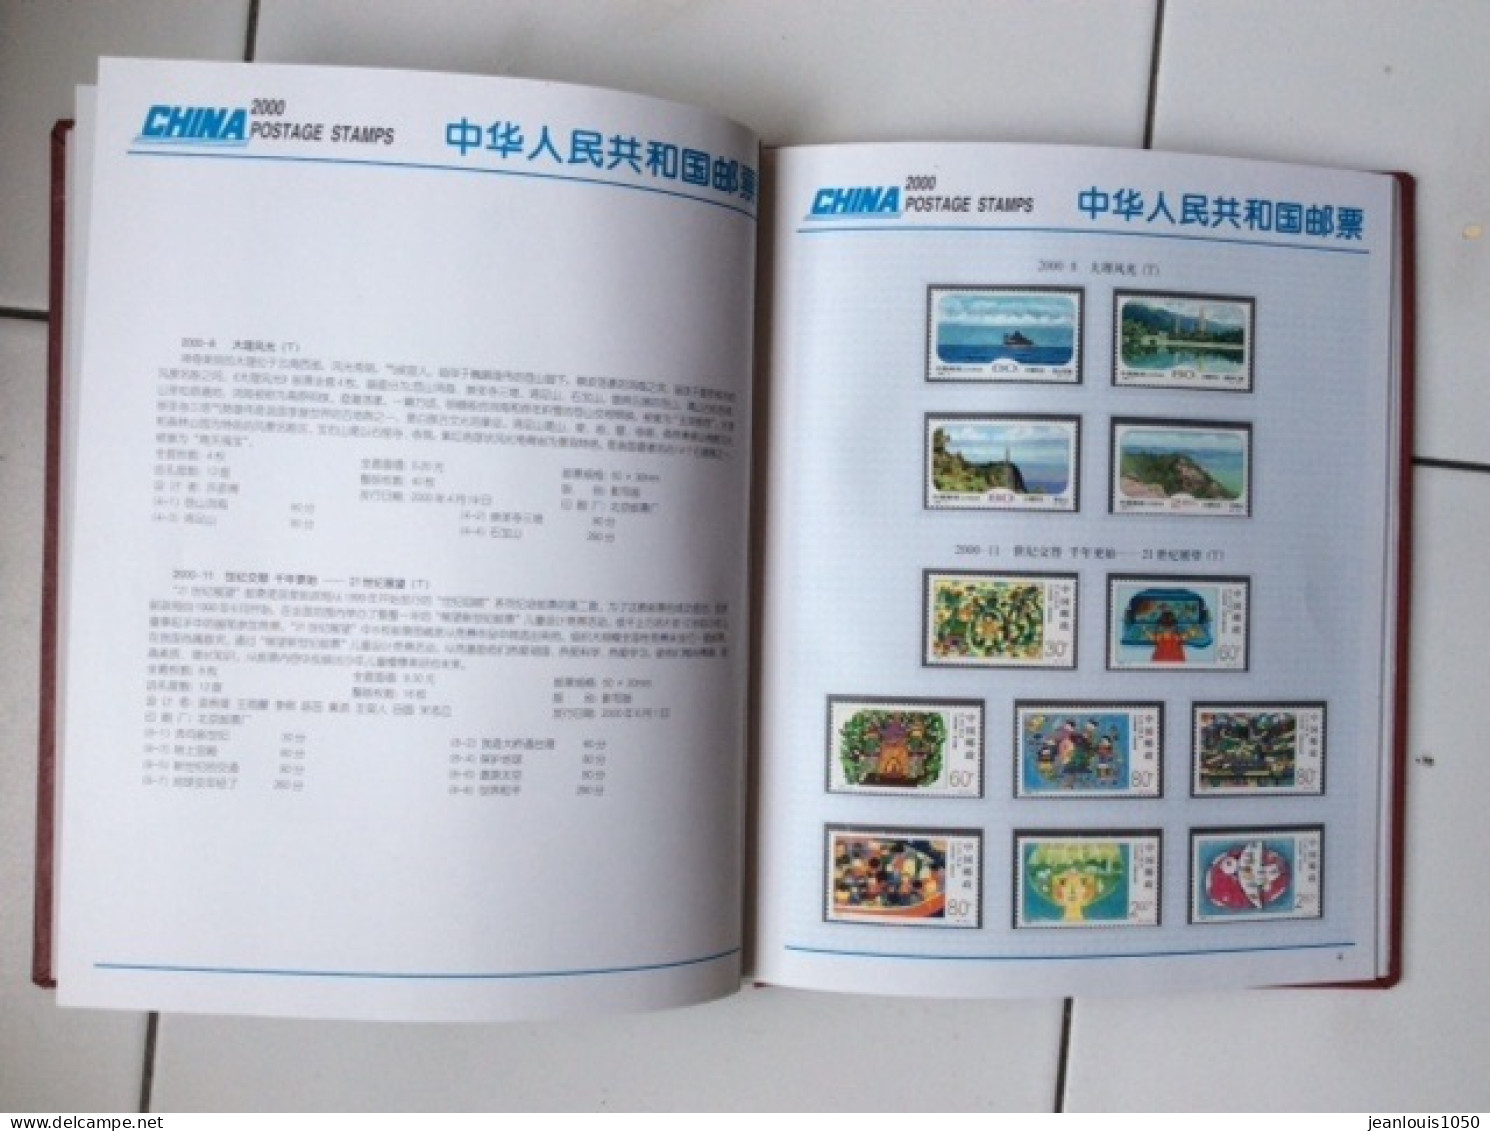 CHINE TIMBRES ANNEE 2000 DANS LIVRET SPECIAL COMMEMORATIF - Covers & Documents